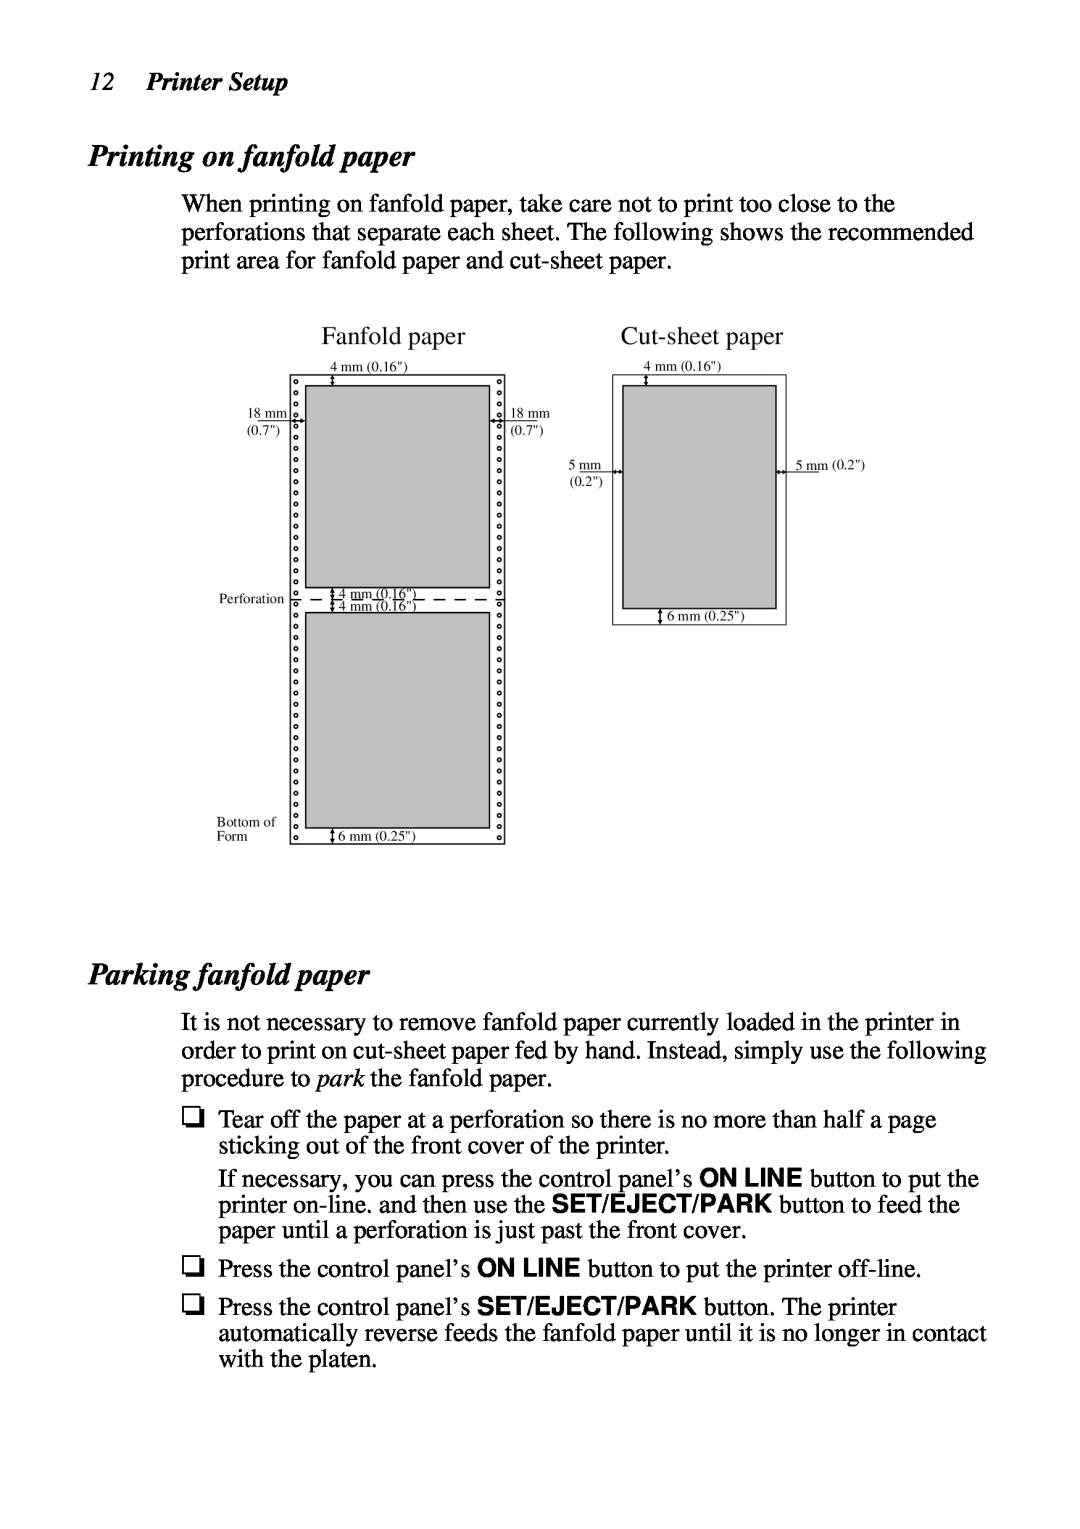 Star Micronics LC-6211 user manual Printing on fanfold paper, Parking fanfold paper, Printer Setup 